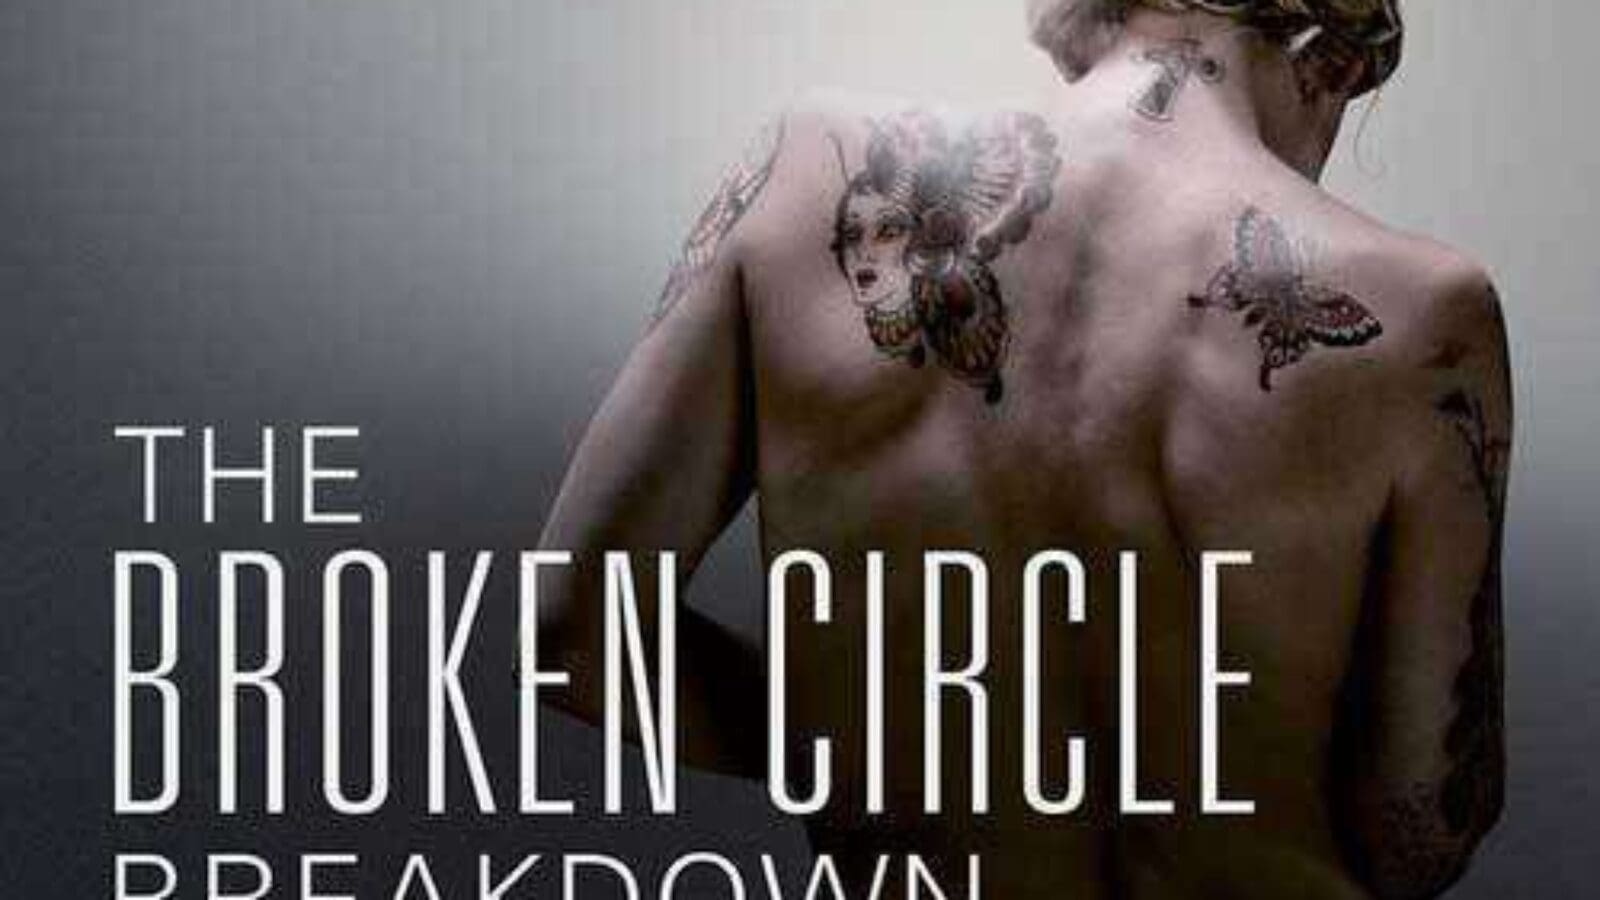 SOUNDTRACK The Broken Circle Breakdown